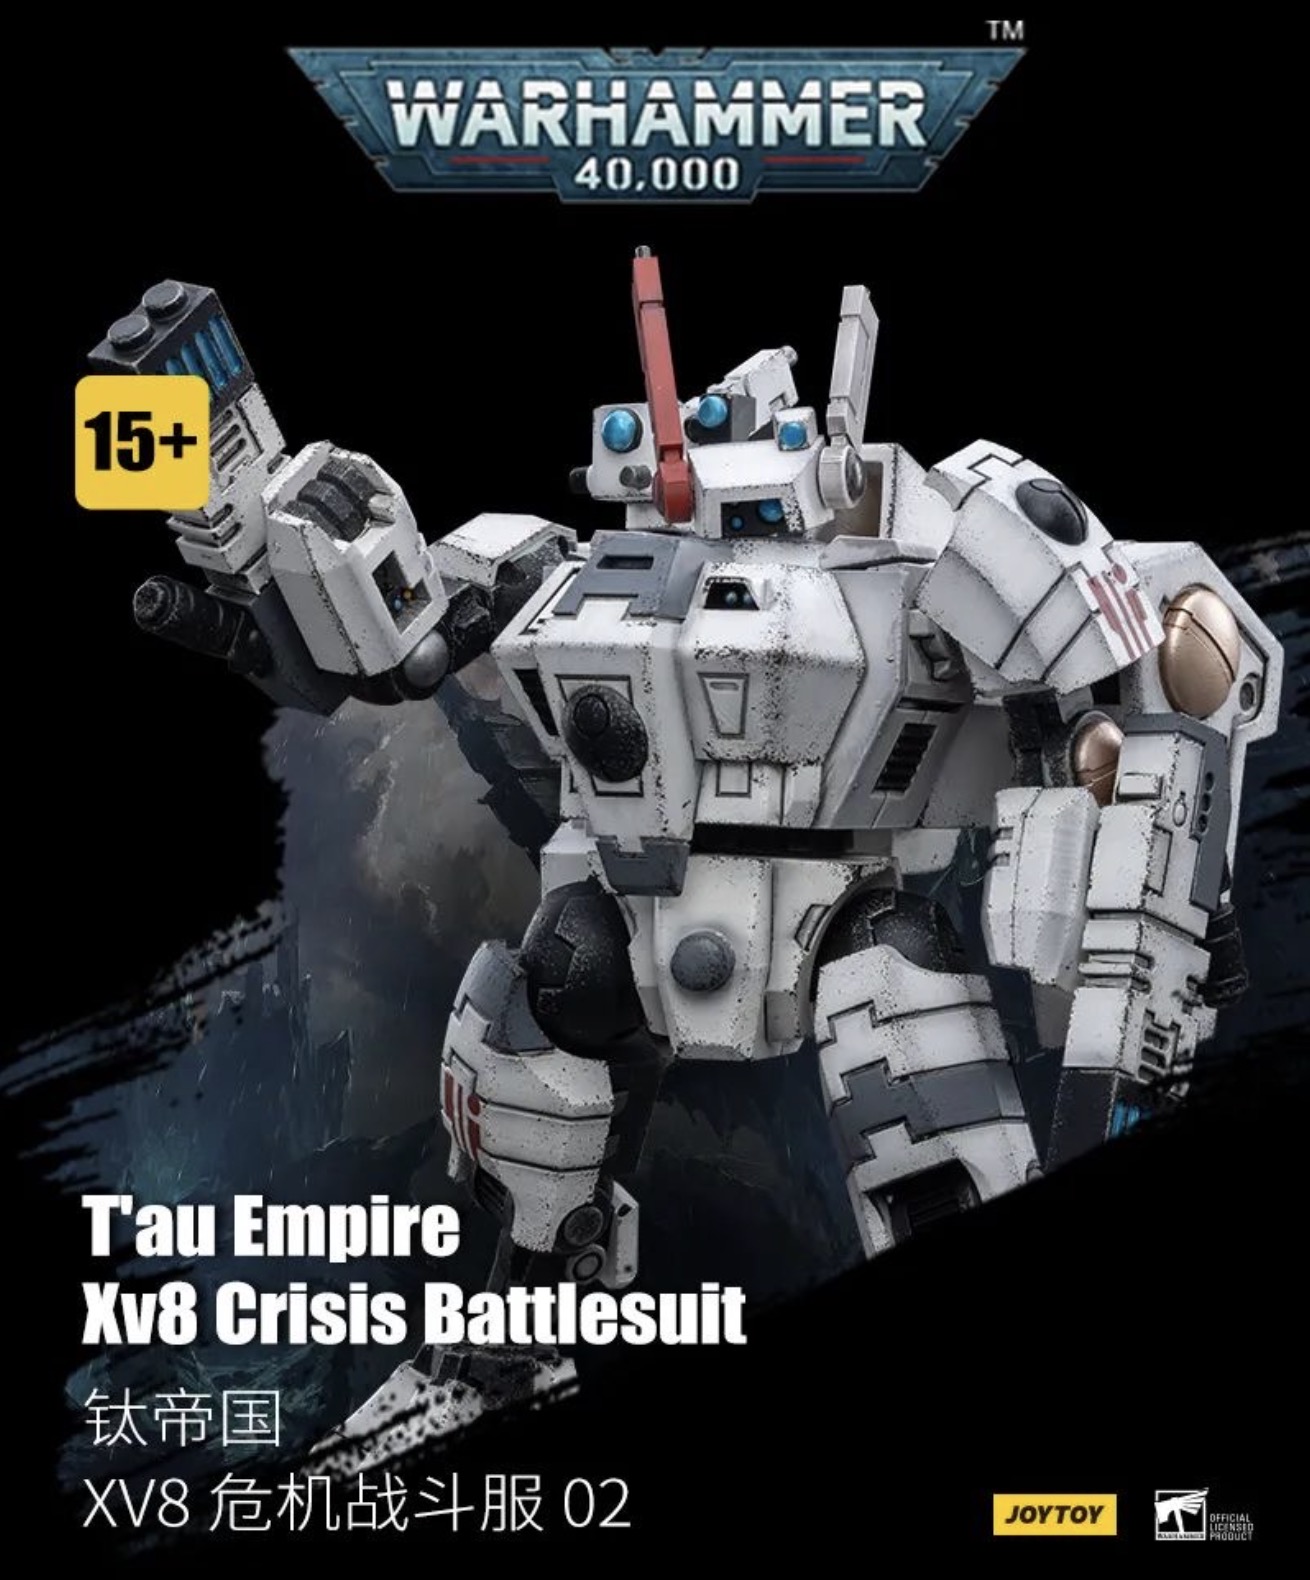 JoyToy 1/18 Warhammer 40K - T'au Empire Xv8 Crisis Battlesuit 02